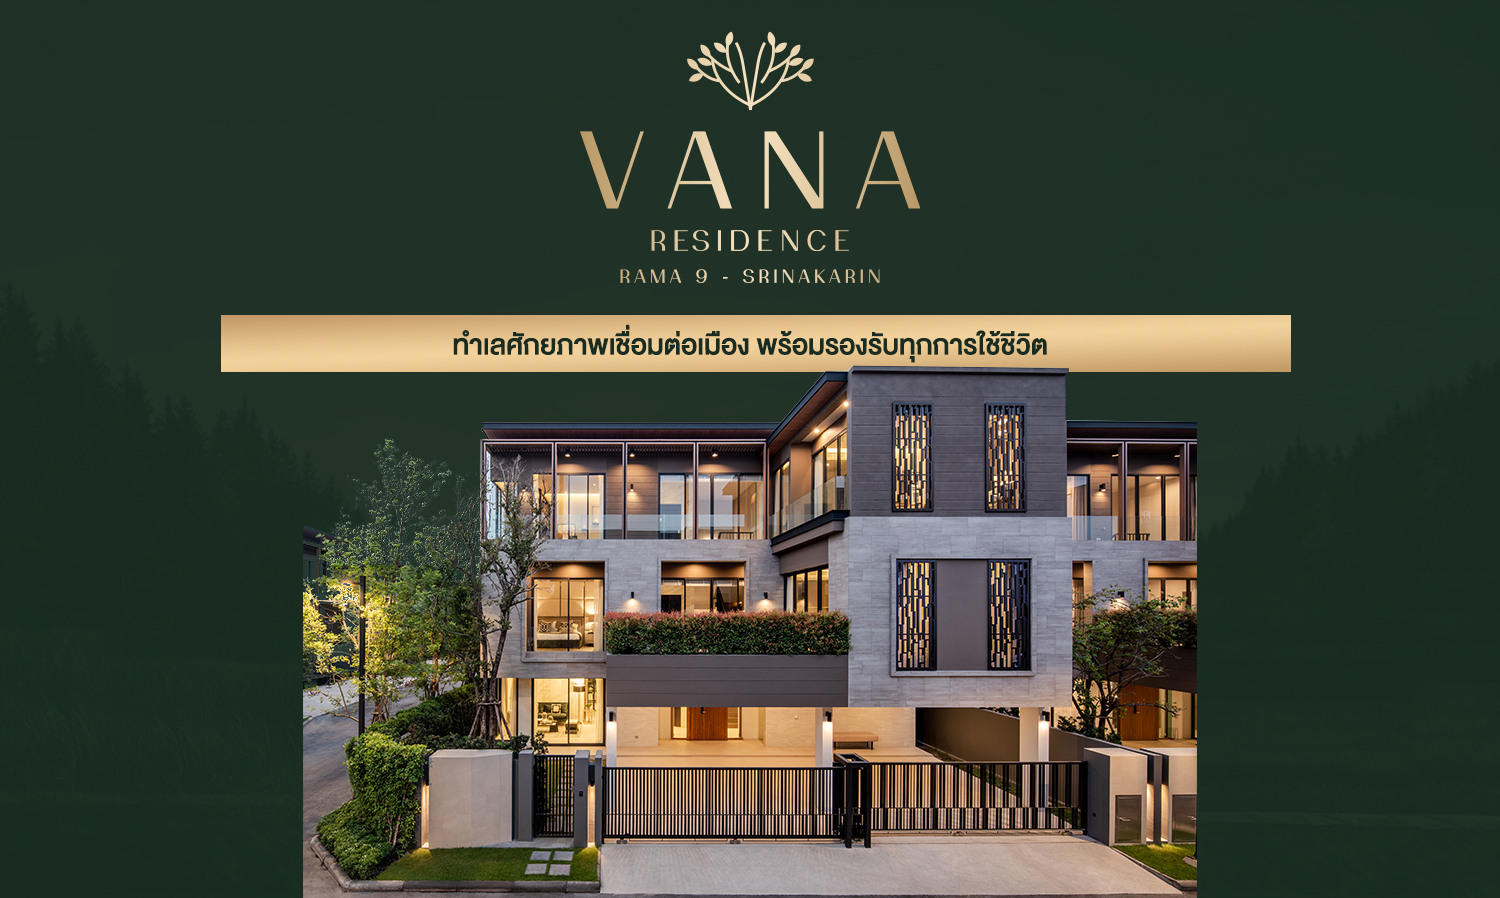 vana-residence-พระราม-9-–-ศรีนครินทร์-ทำเลศักยภาพเชื่อมต่อเมือง-พร้อมรองรับทุกการใช้ชีวิต